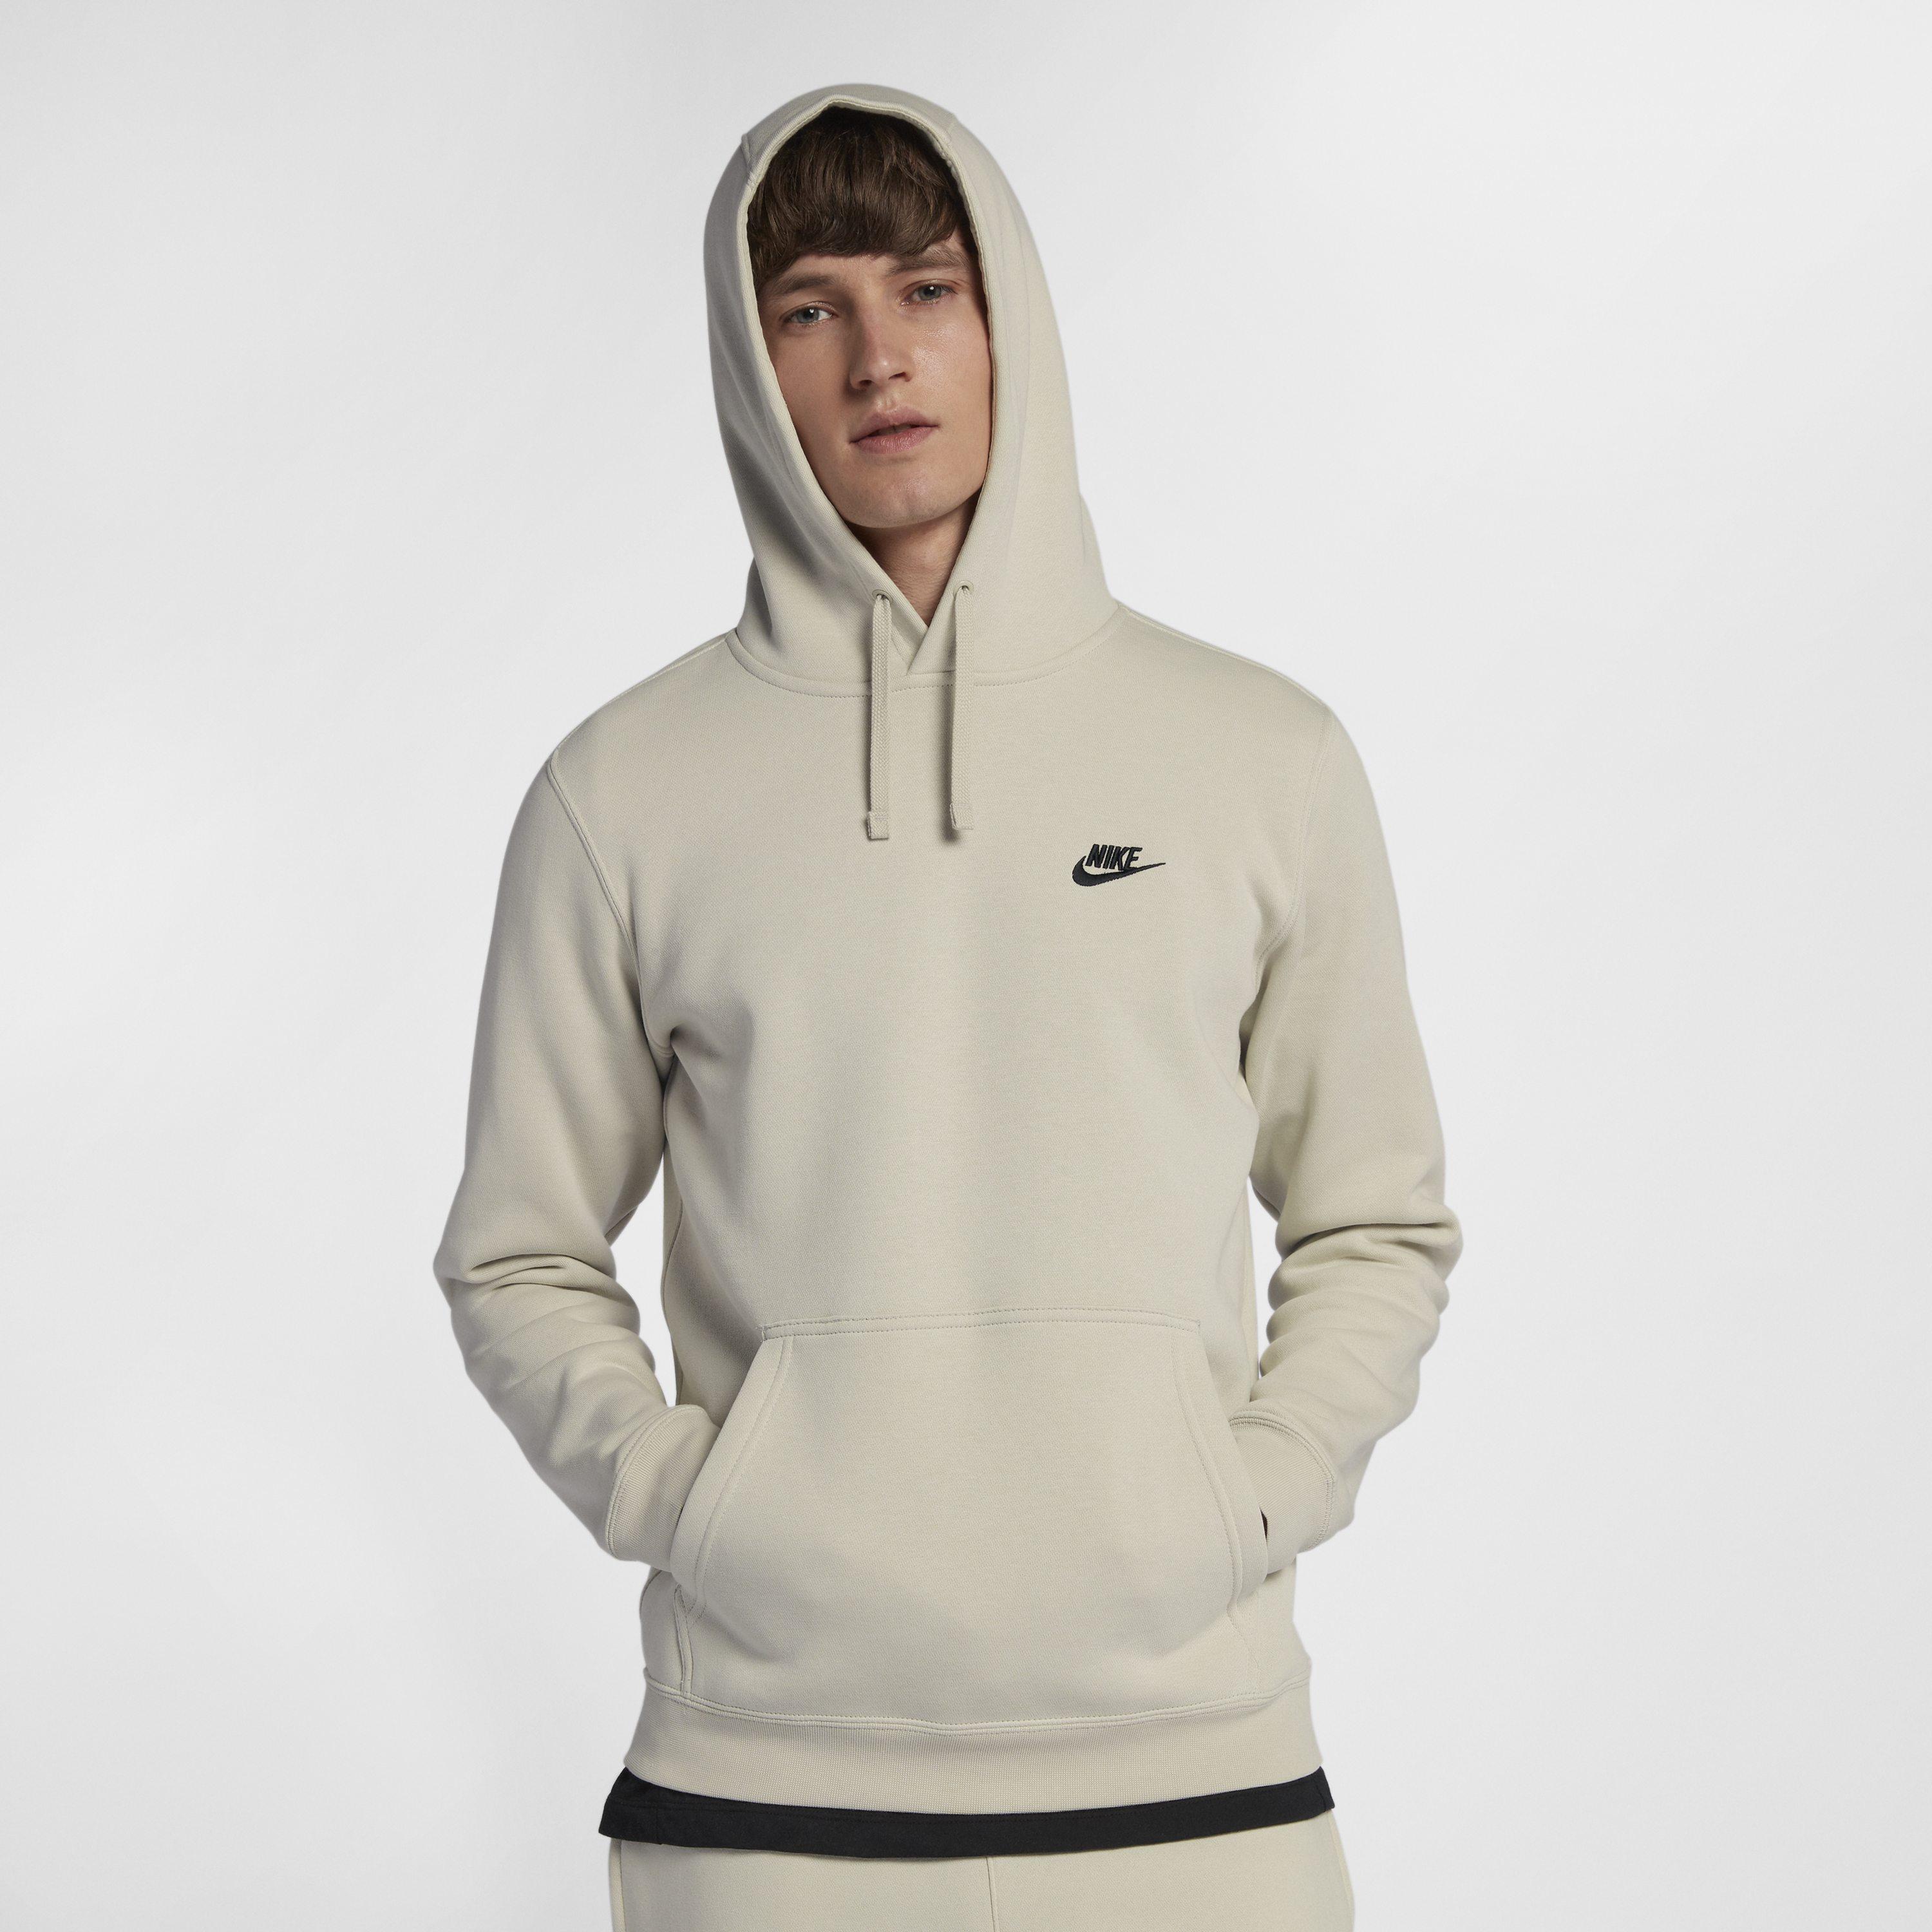 Nike Fleece Sportswear Pullover Hoodie in Cream (Natural) for Men - Lyst